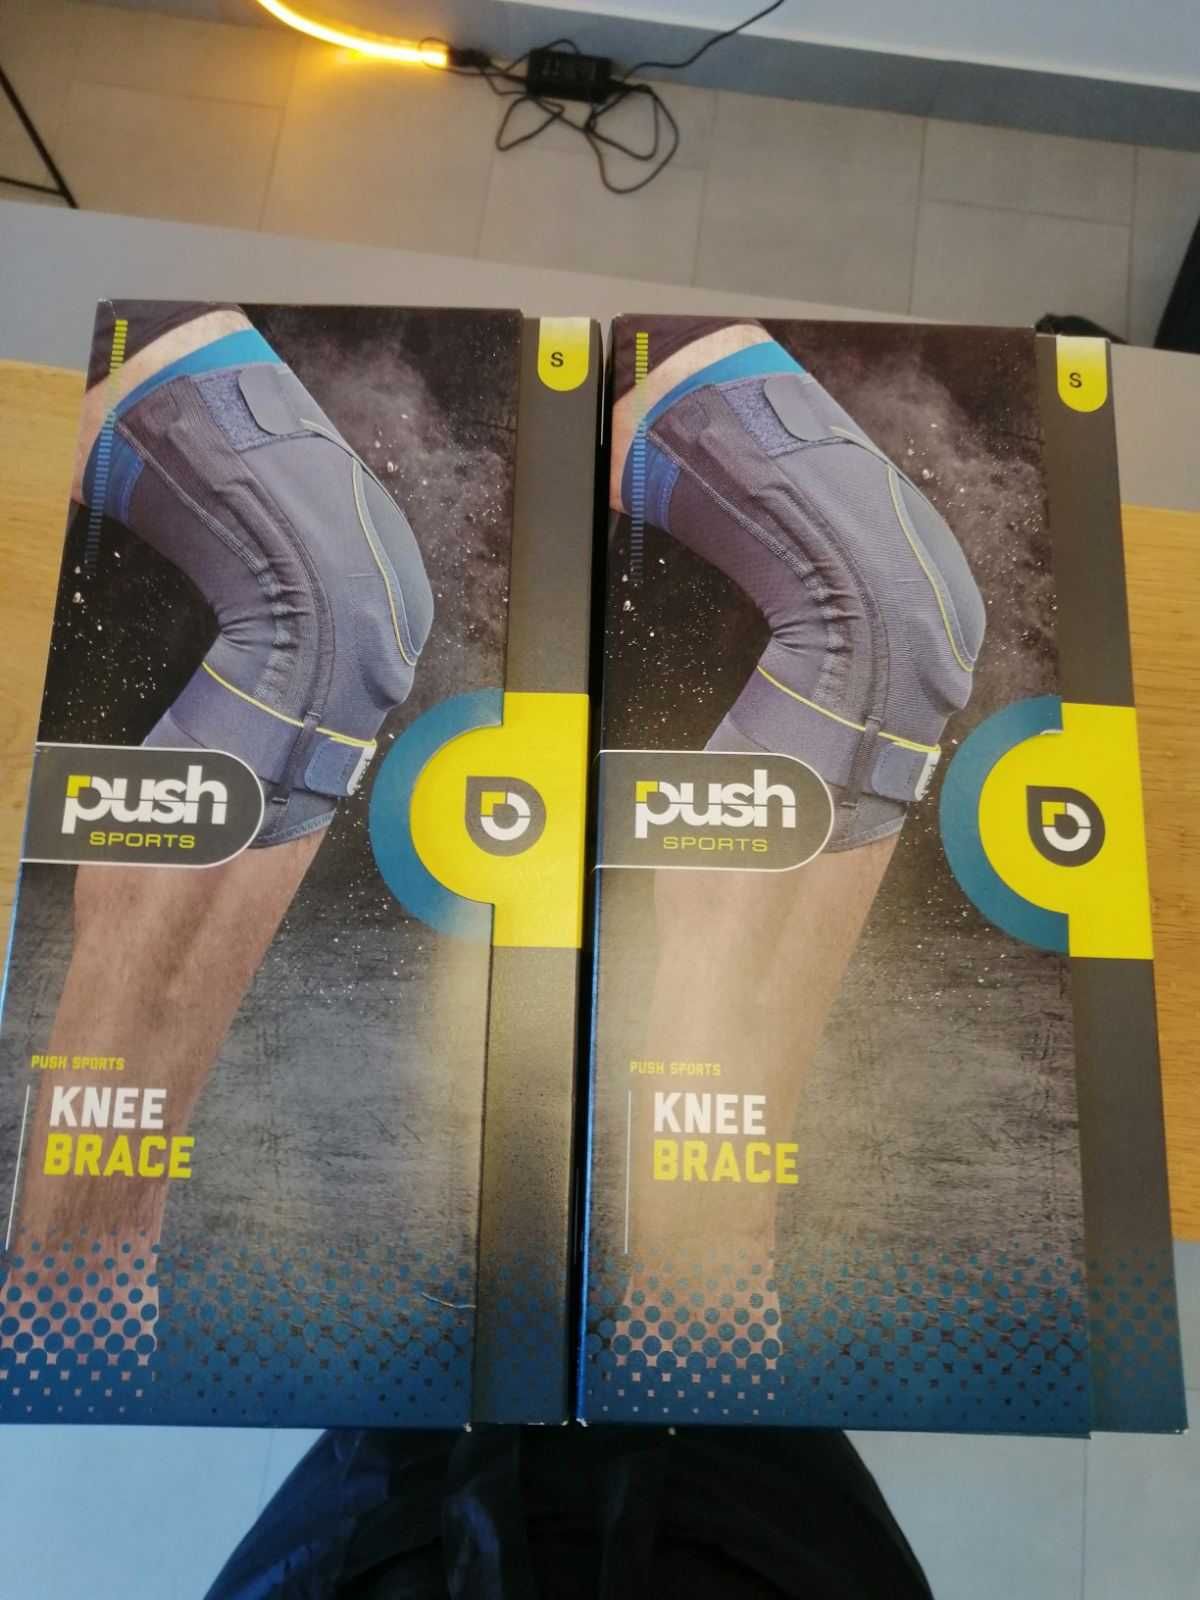 Бандаж на коленный сустав knee brace push sports, S. 2 штуки